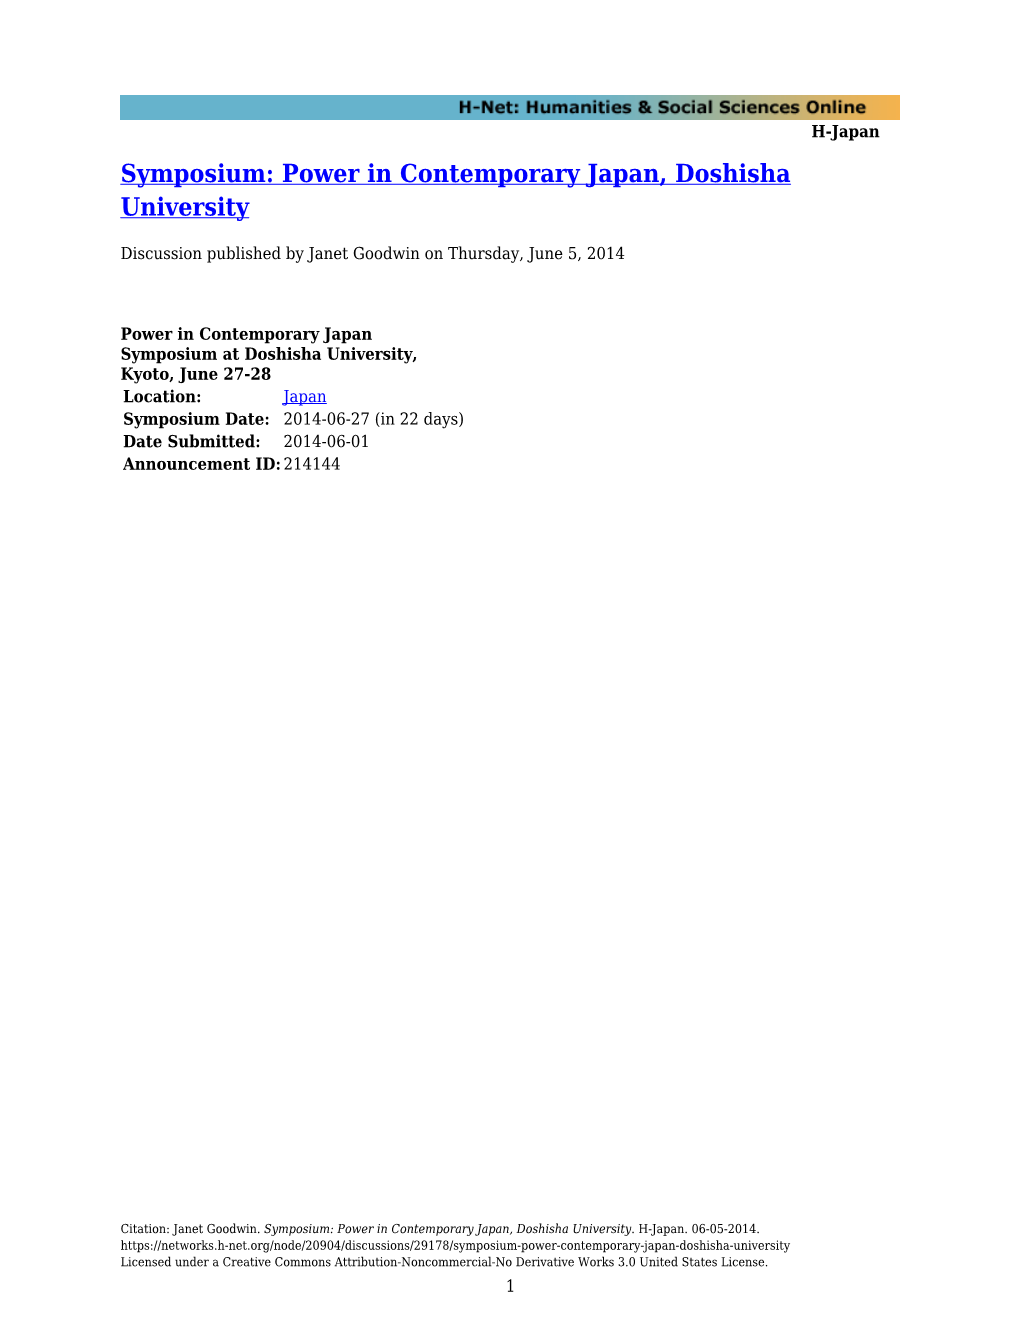 Symposium: Power in Contemporary Japan, Doshisha University